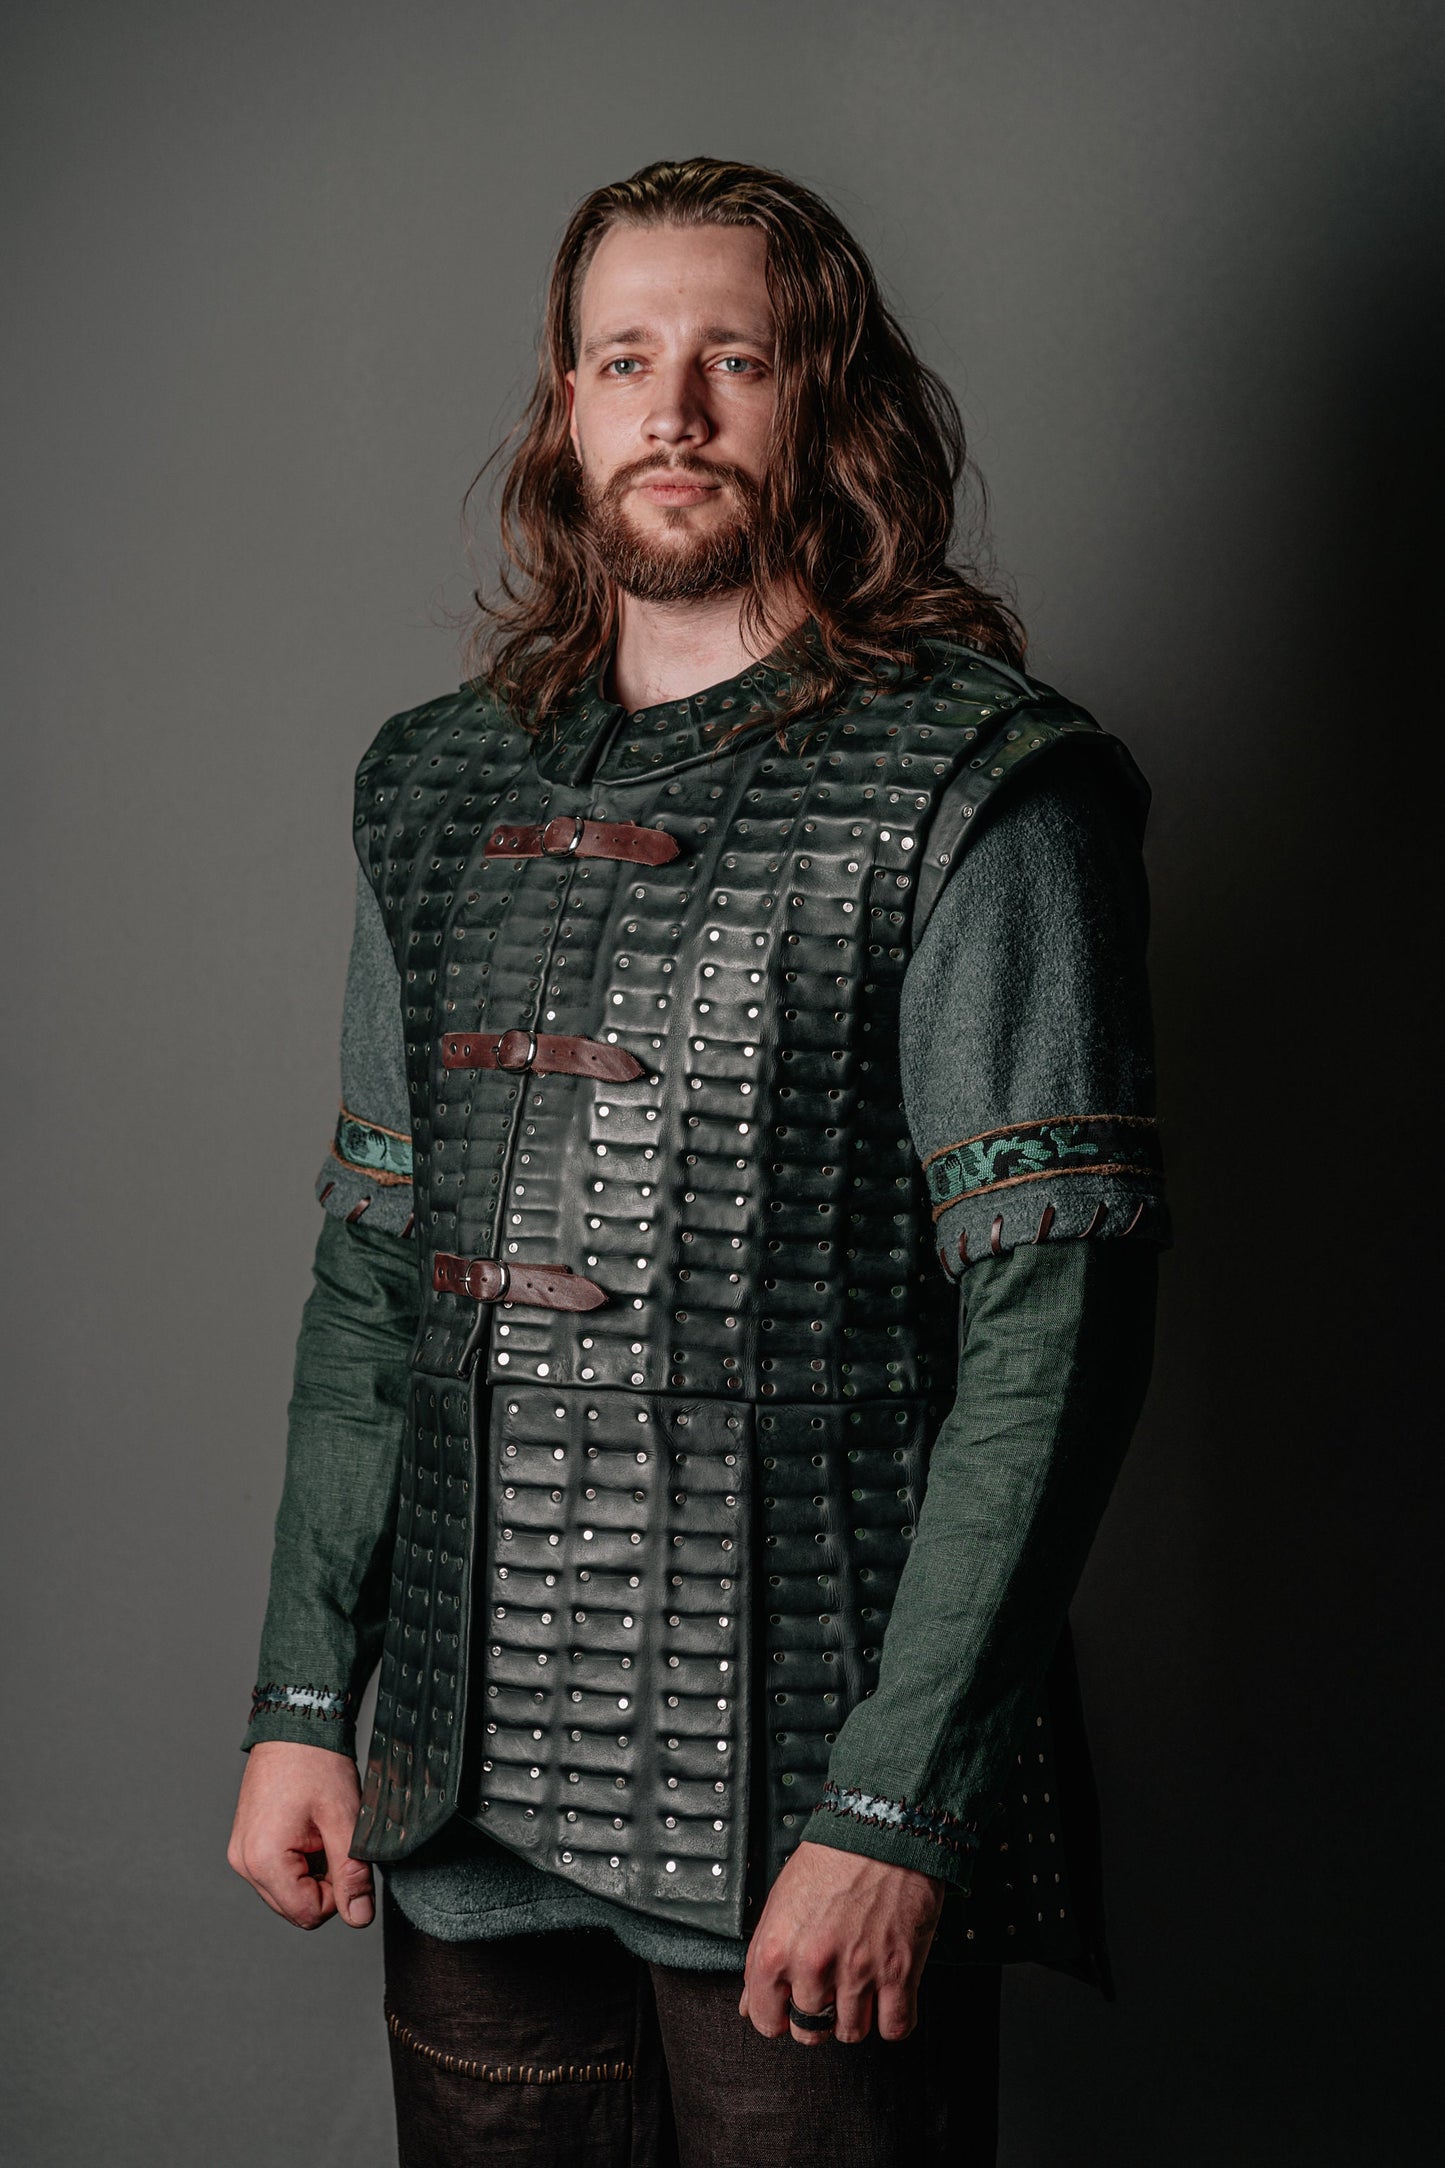 Prince Caspian green brigandine (Chronicles of Narnia)